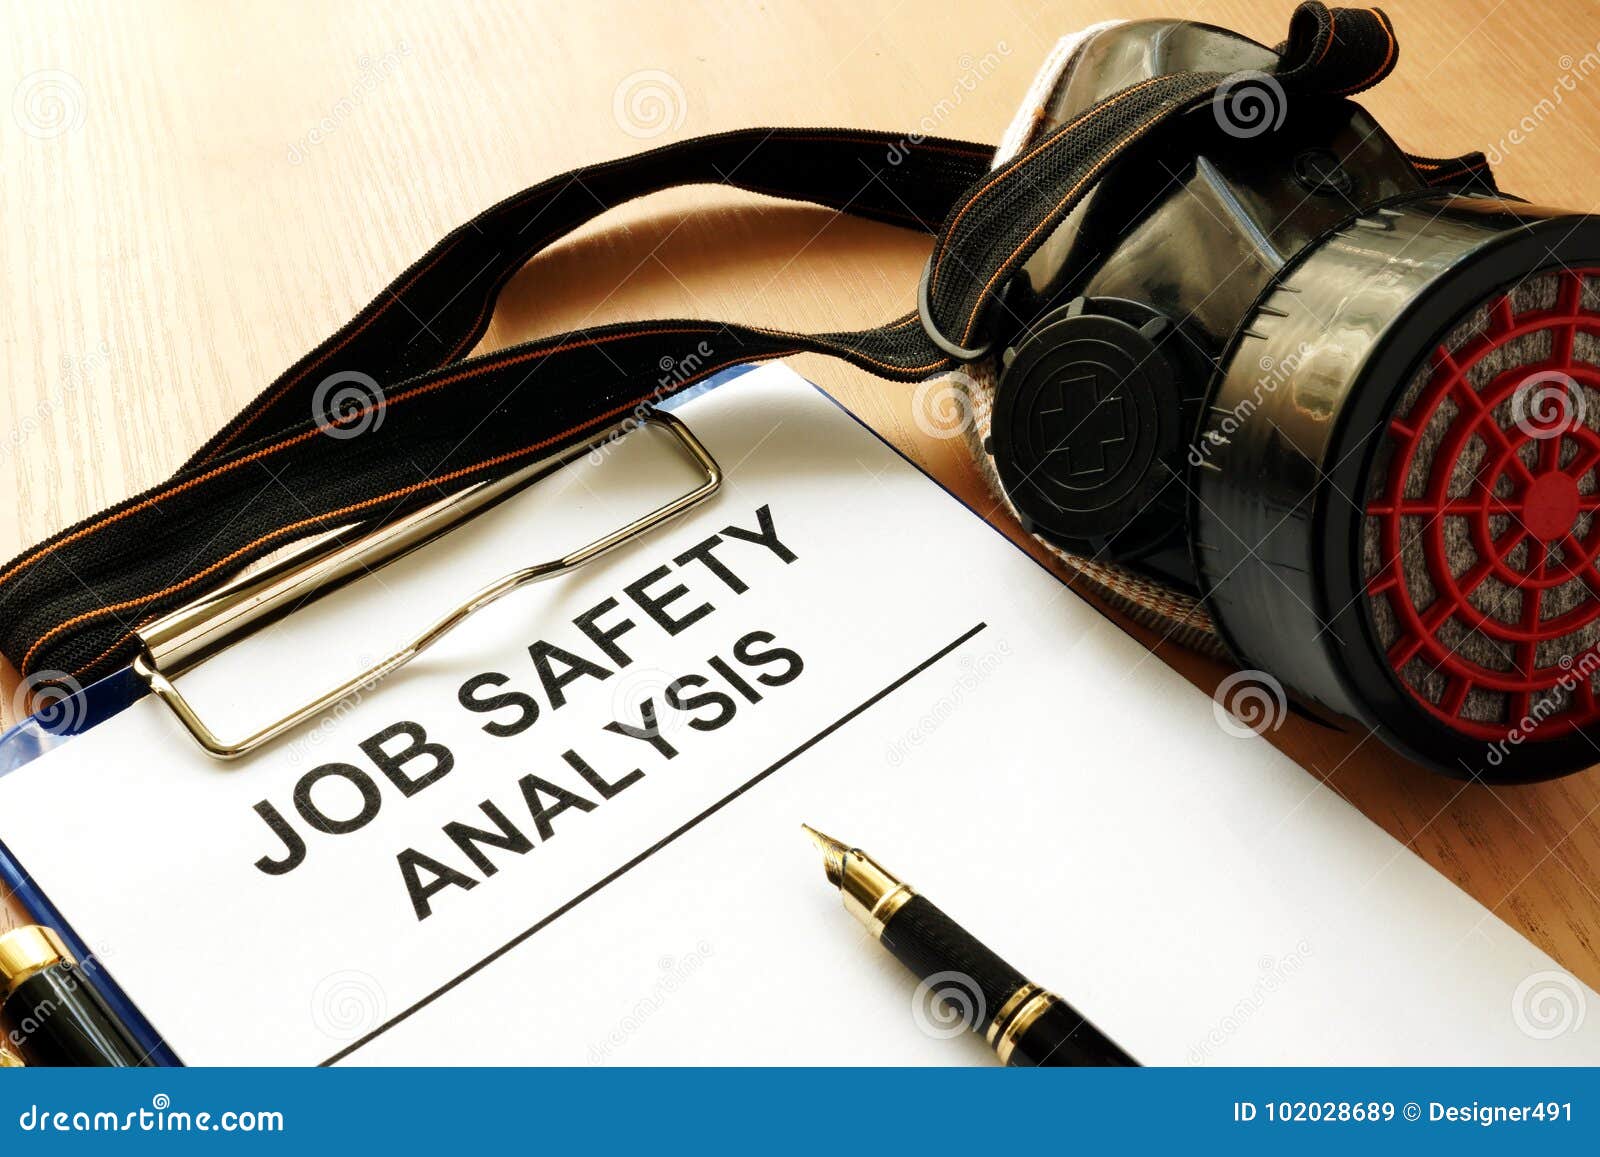 job safety analysis.